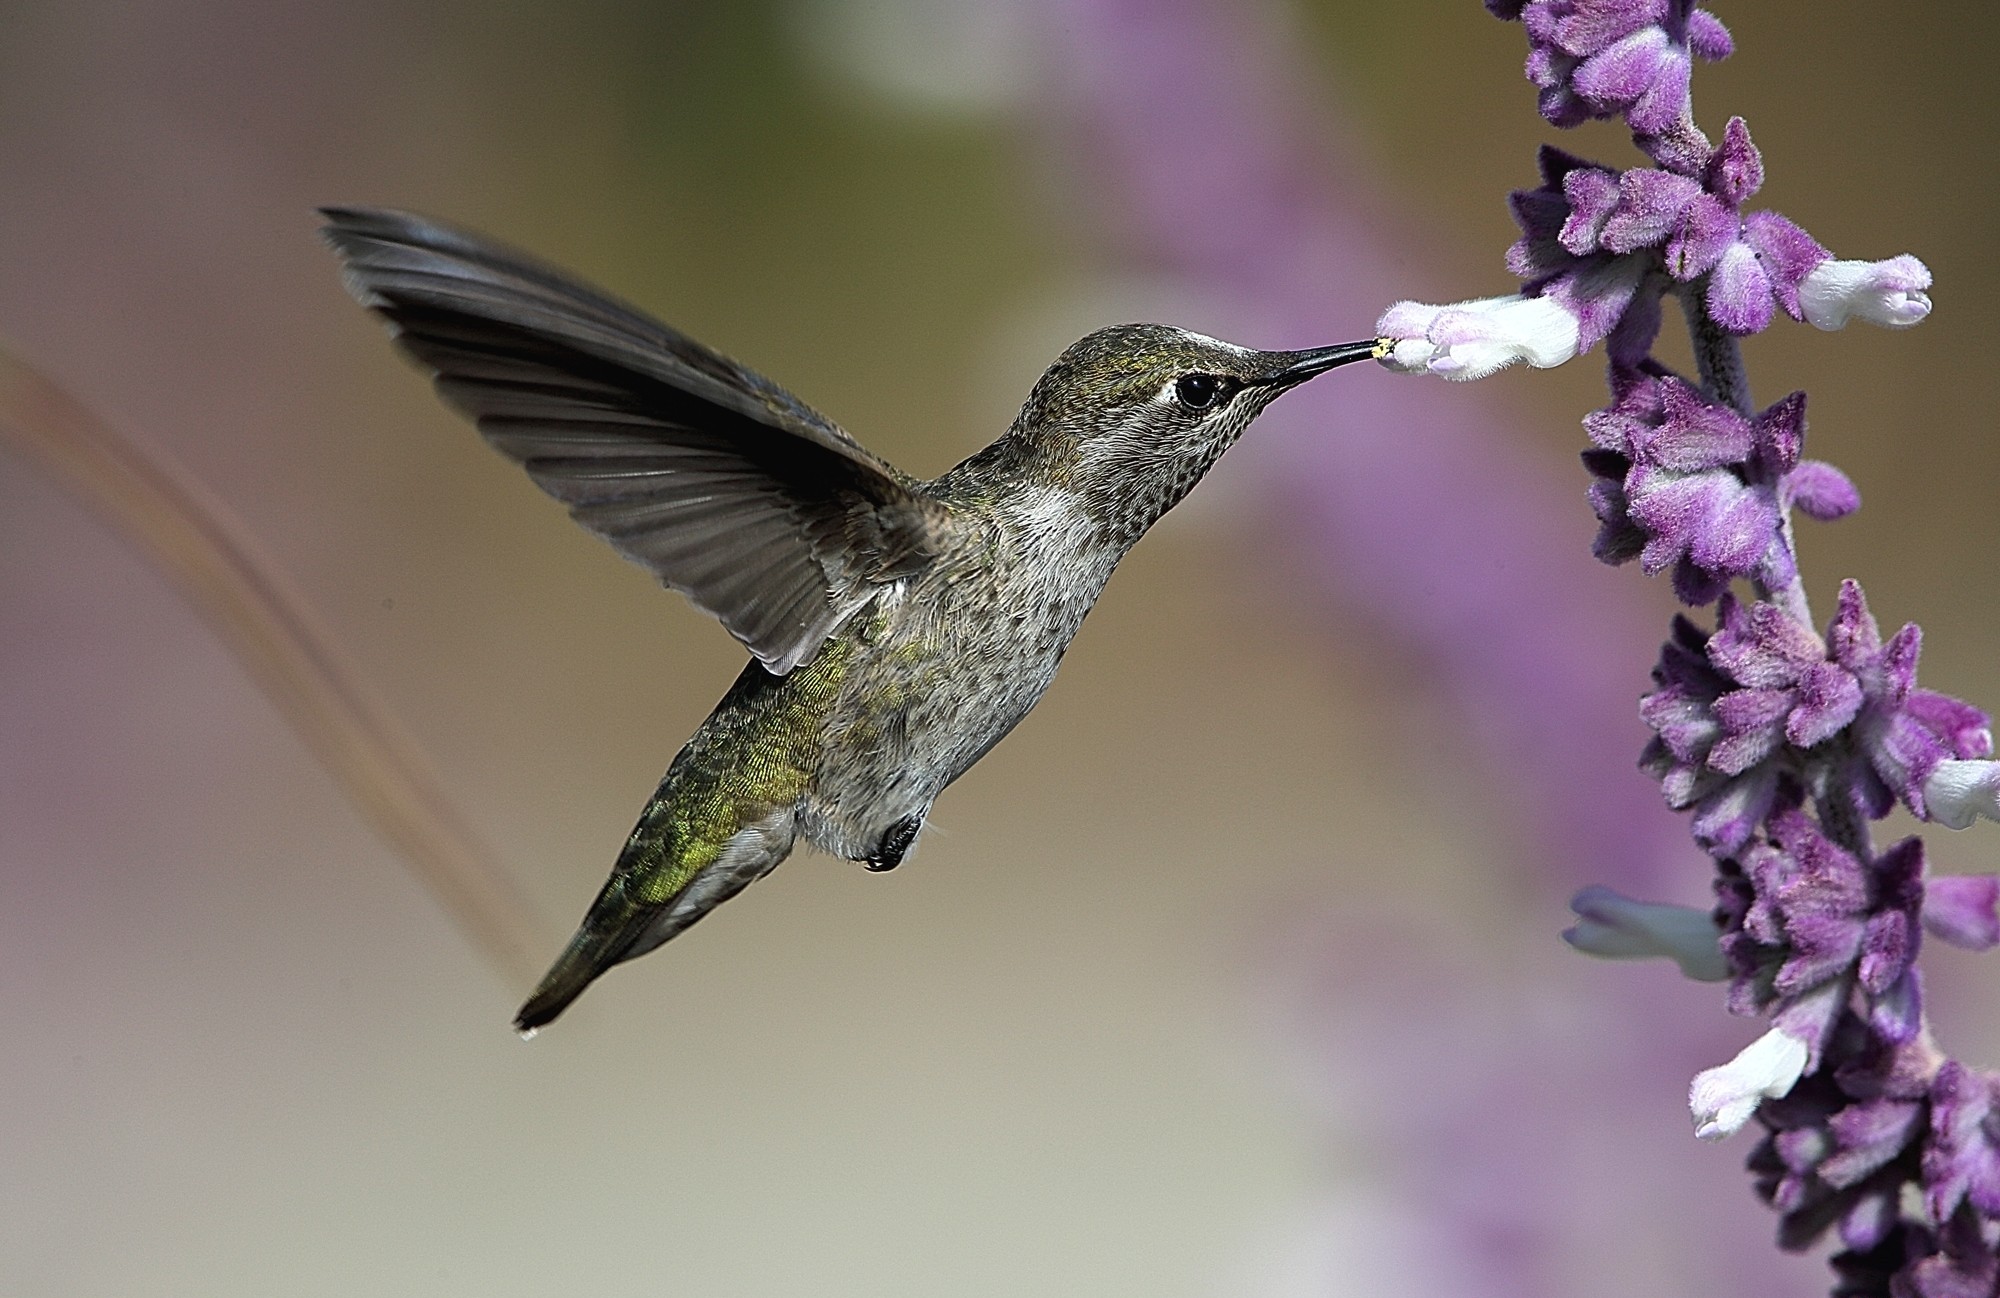 344447 descargar imagen animales, colibrí, vuelo, aves: fondos de pantalla y protectores de pantalla gratis